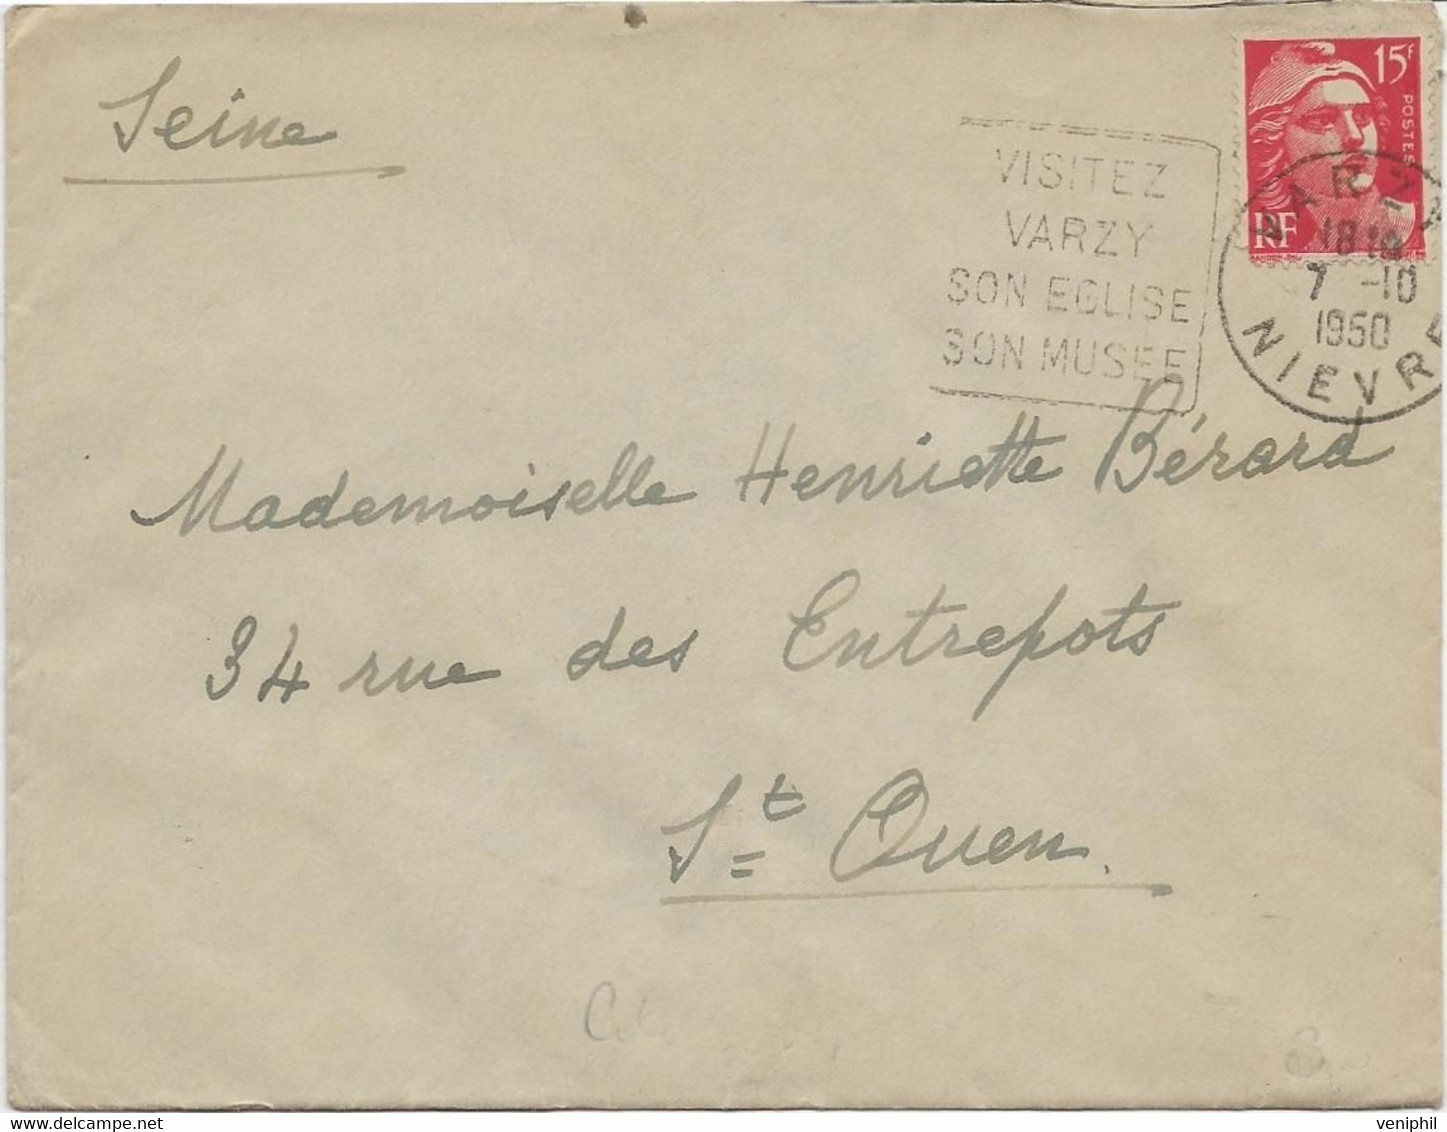 LETTRE OBLITERATION DAGUIN - " - VISITEZ VARZY -SON EGLISE SON MUSEE - NIEVRE -ANNEE 1950 - Mechanical Postmarks (Other)